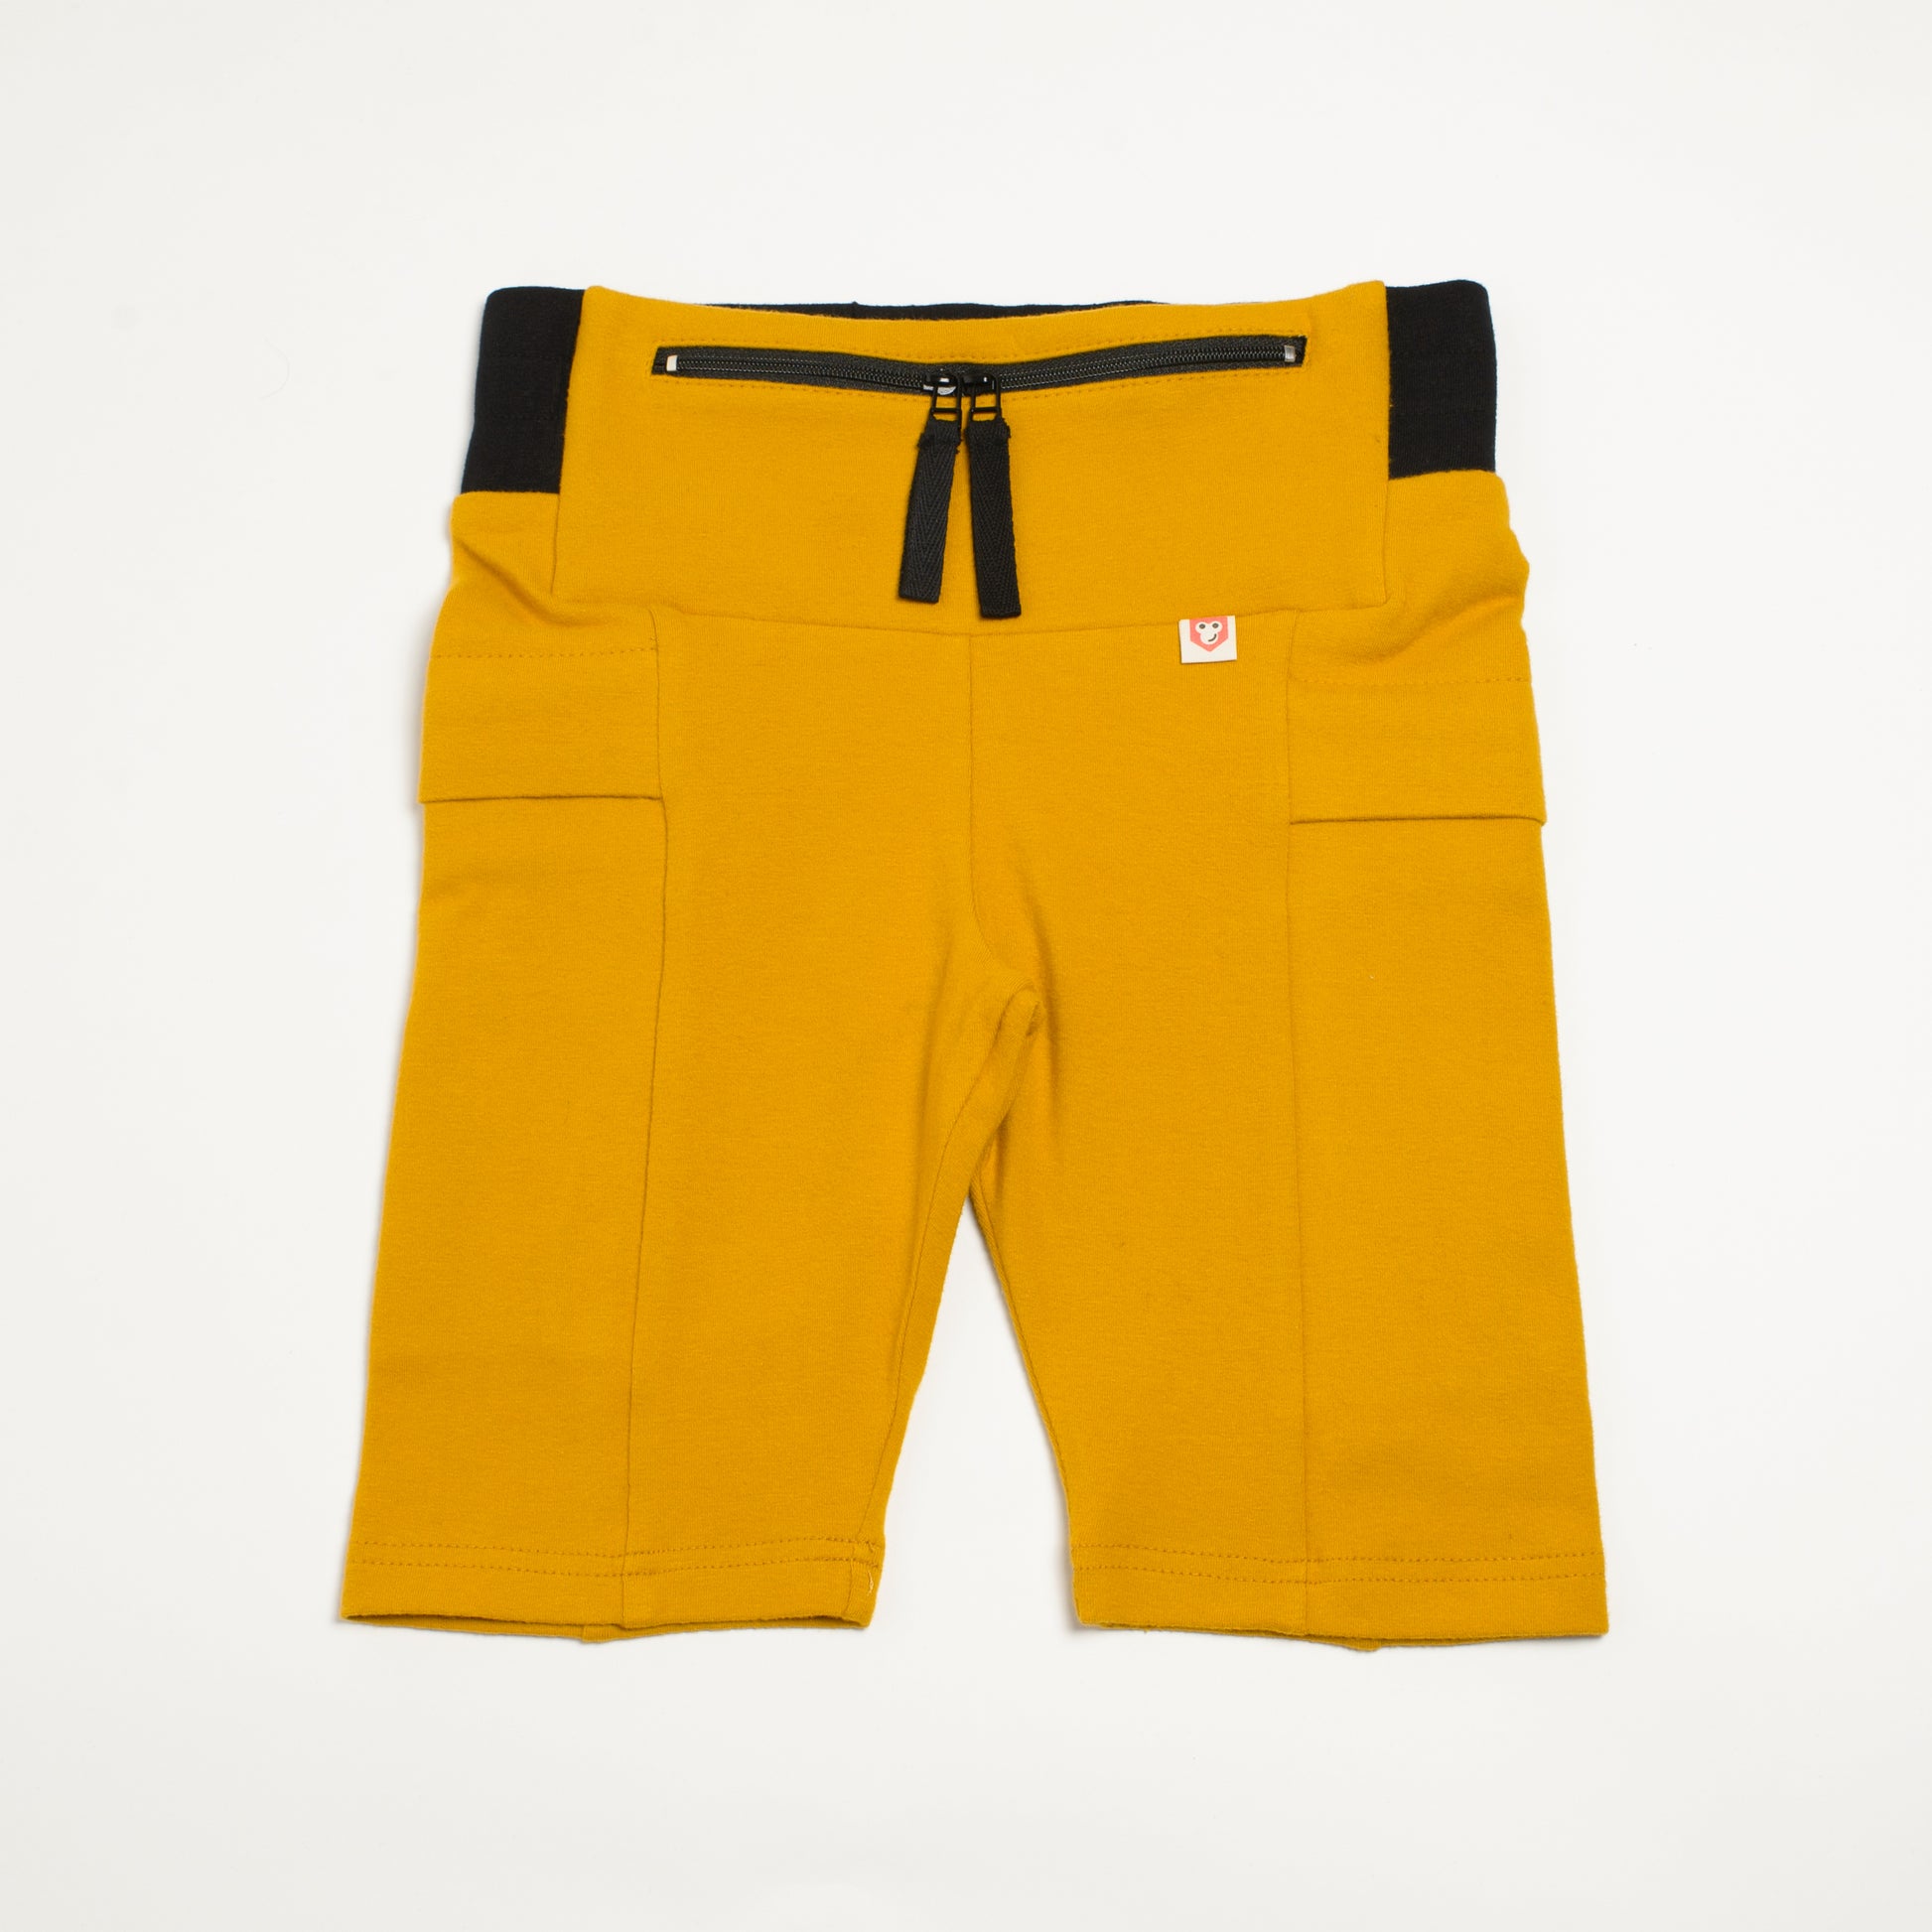 Type 1 Diabetes Clothing - Biker shorts Yellow | Our Pocket Hero